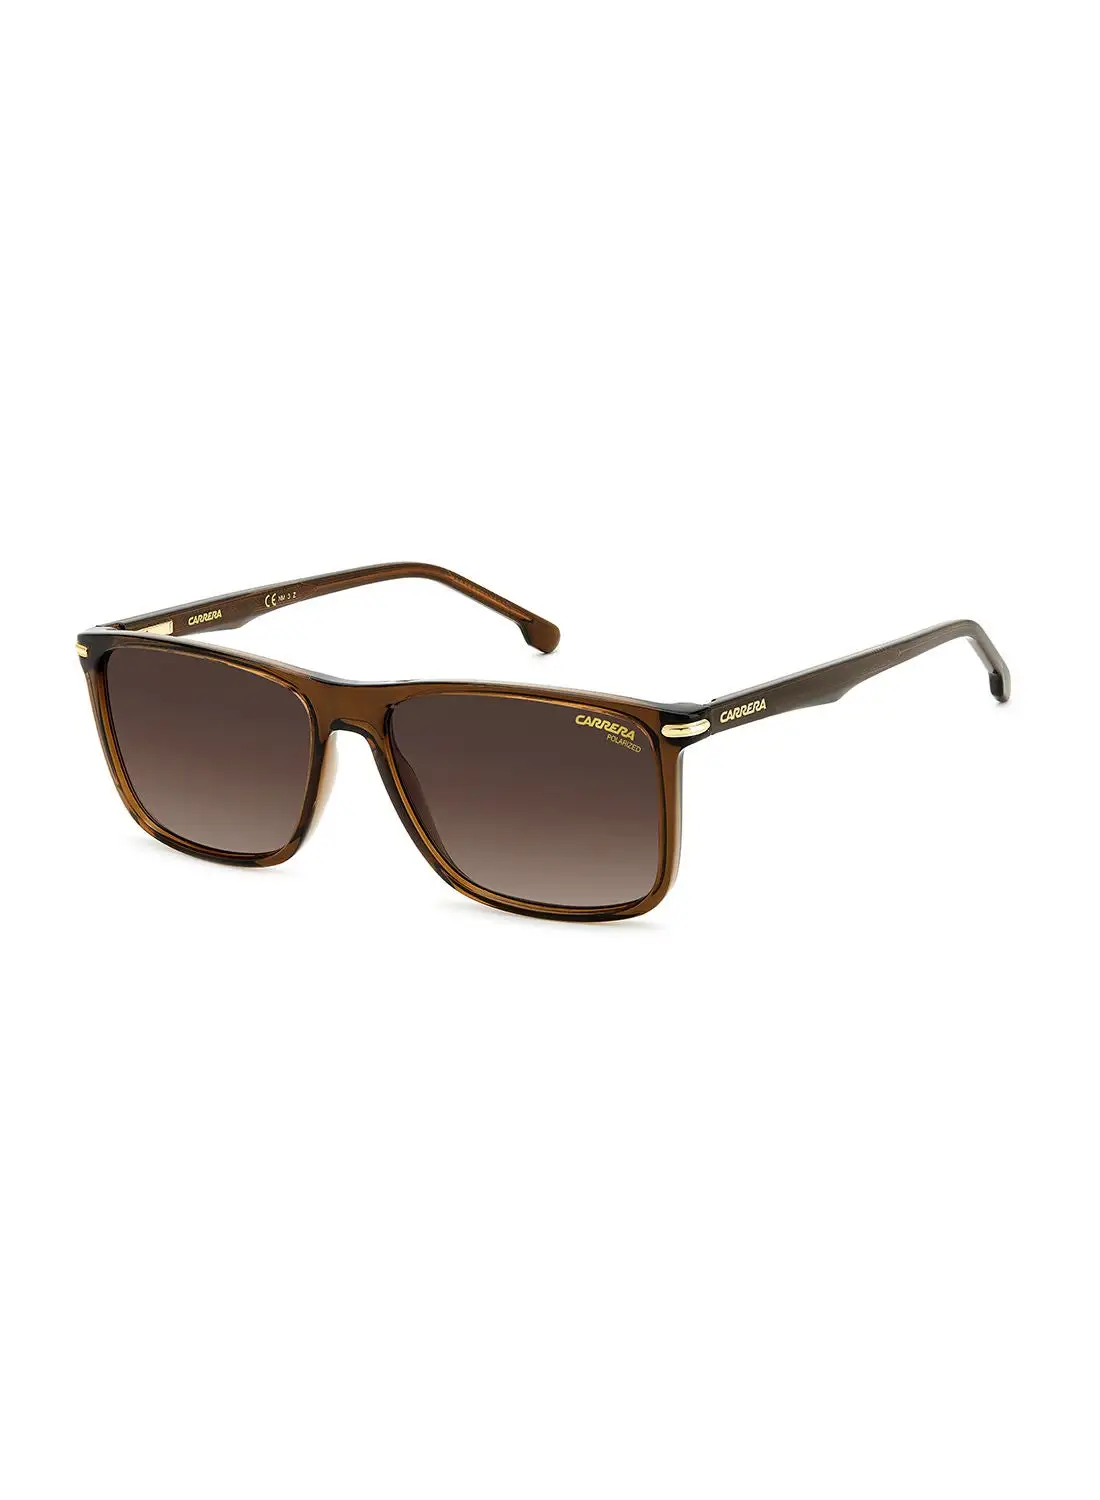 Carrera Men's UV Protection Square Sunglasses - Carrera 298/S Brown 57 - Lens Size: 57 Mm